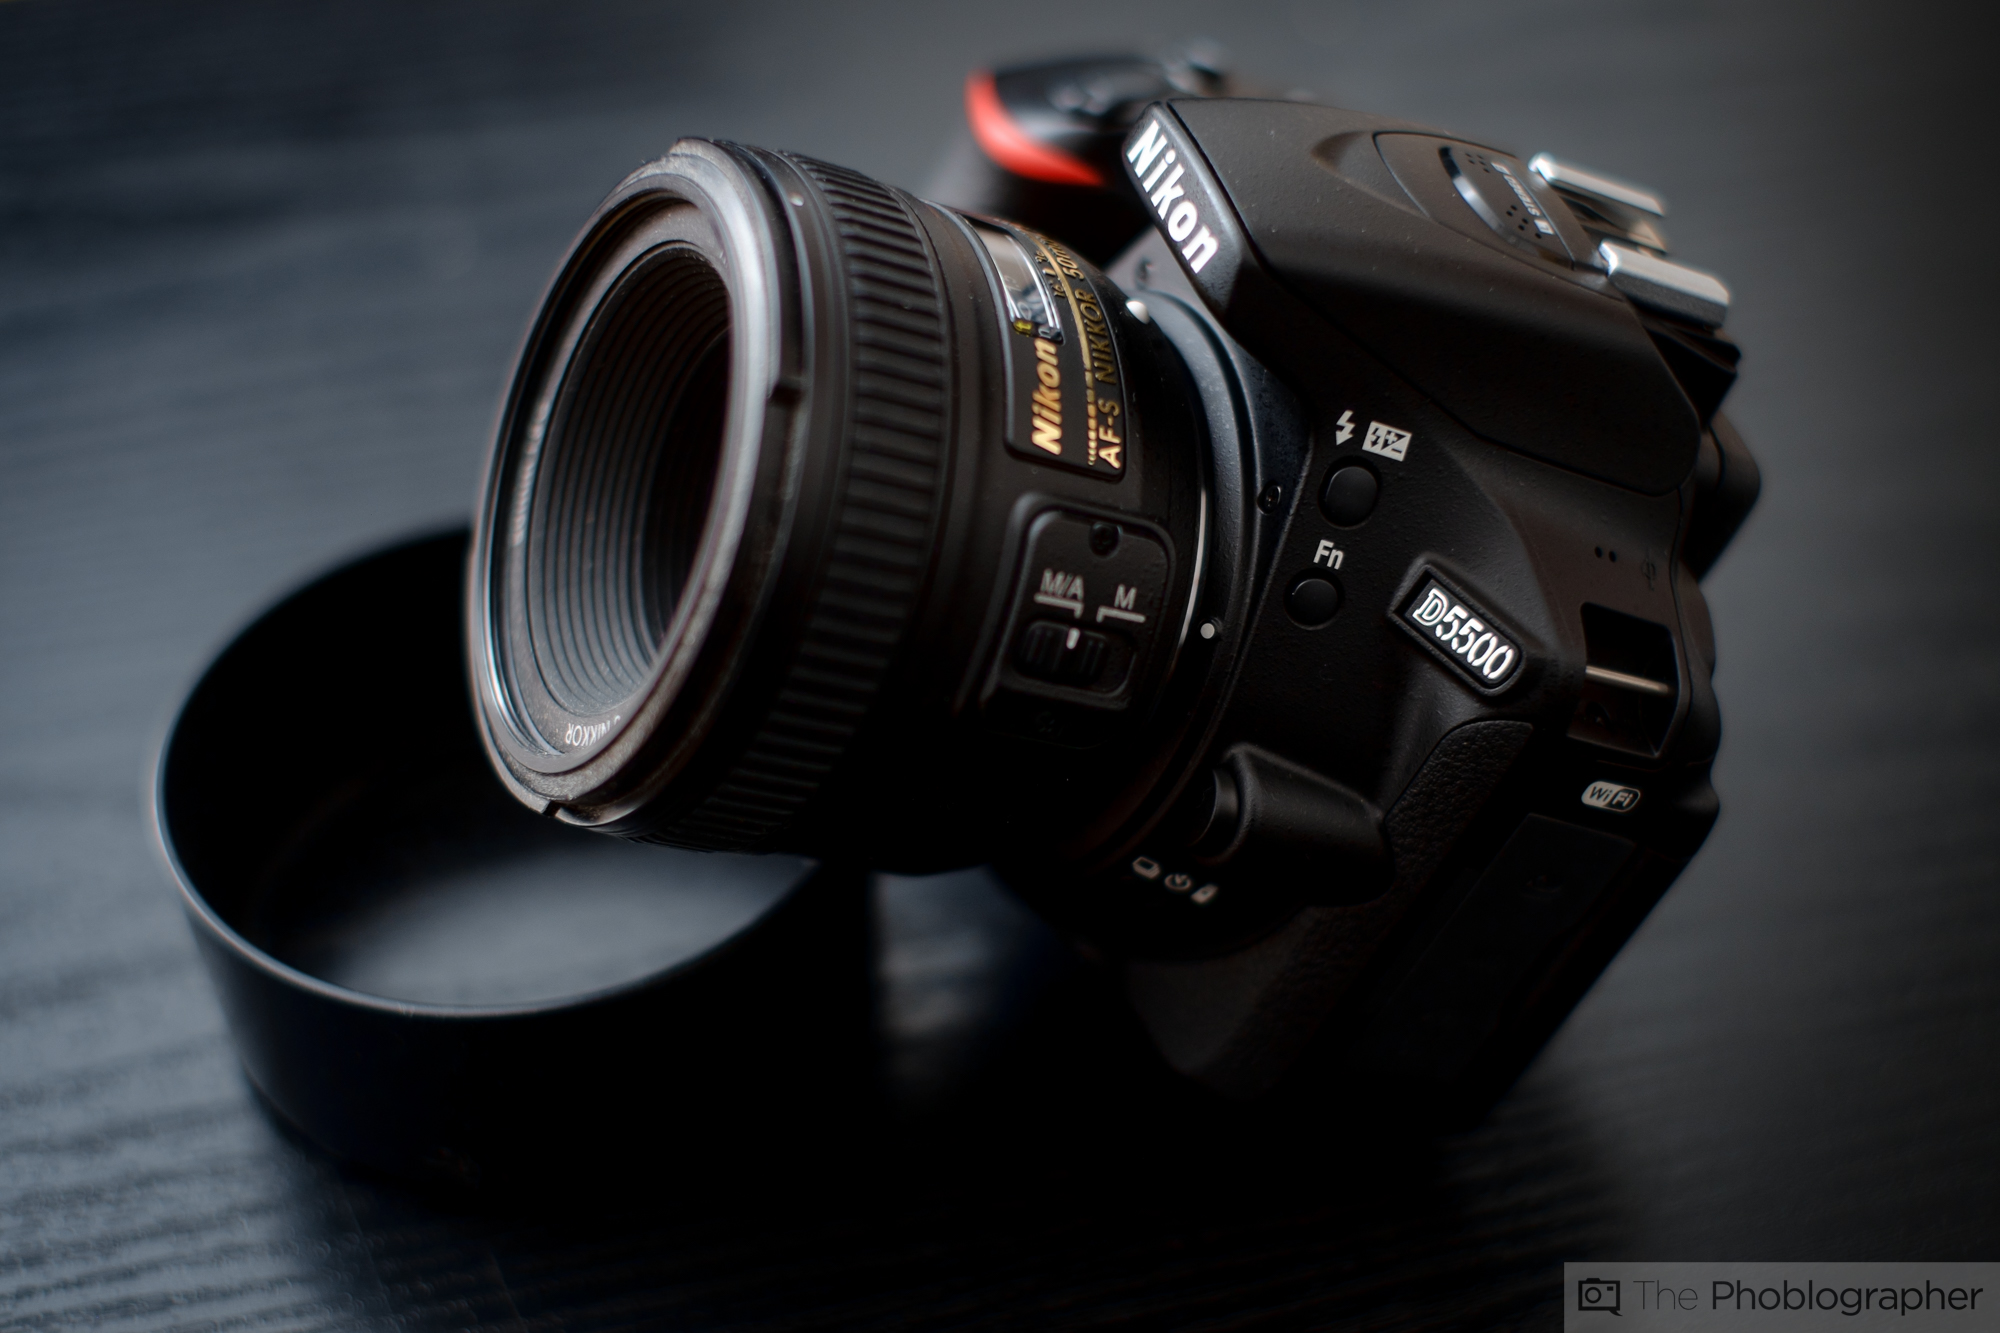 Nikon D5300 Reviews, Pros and Cons